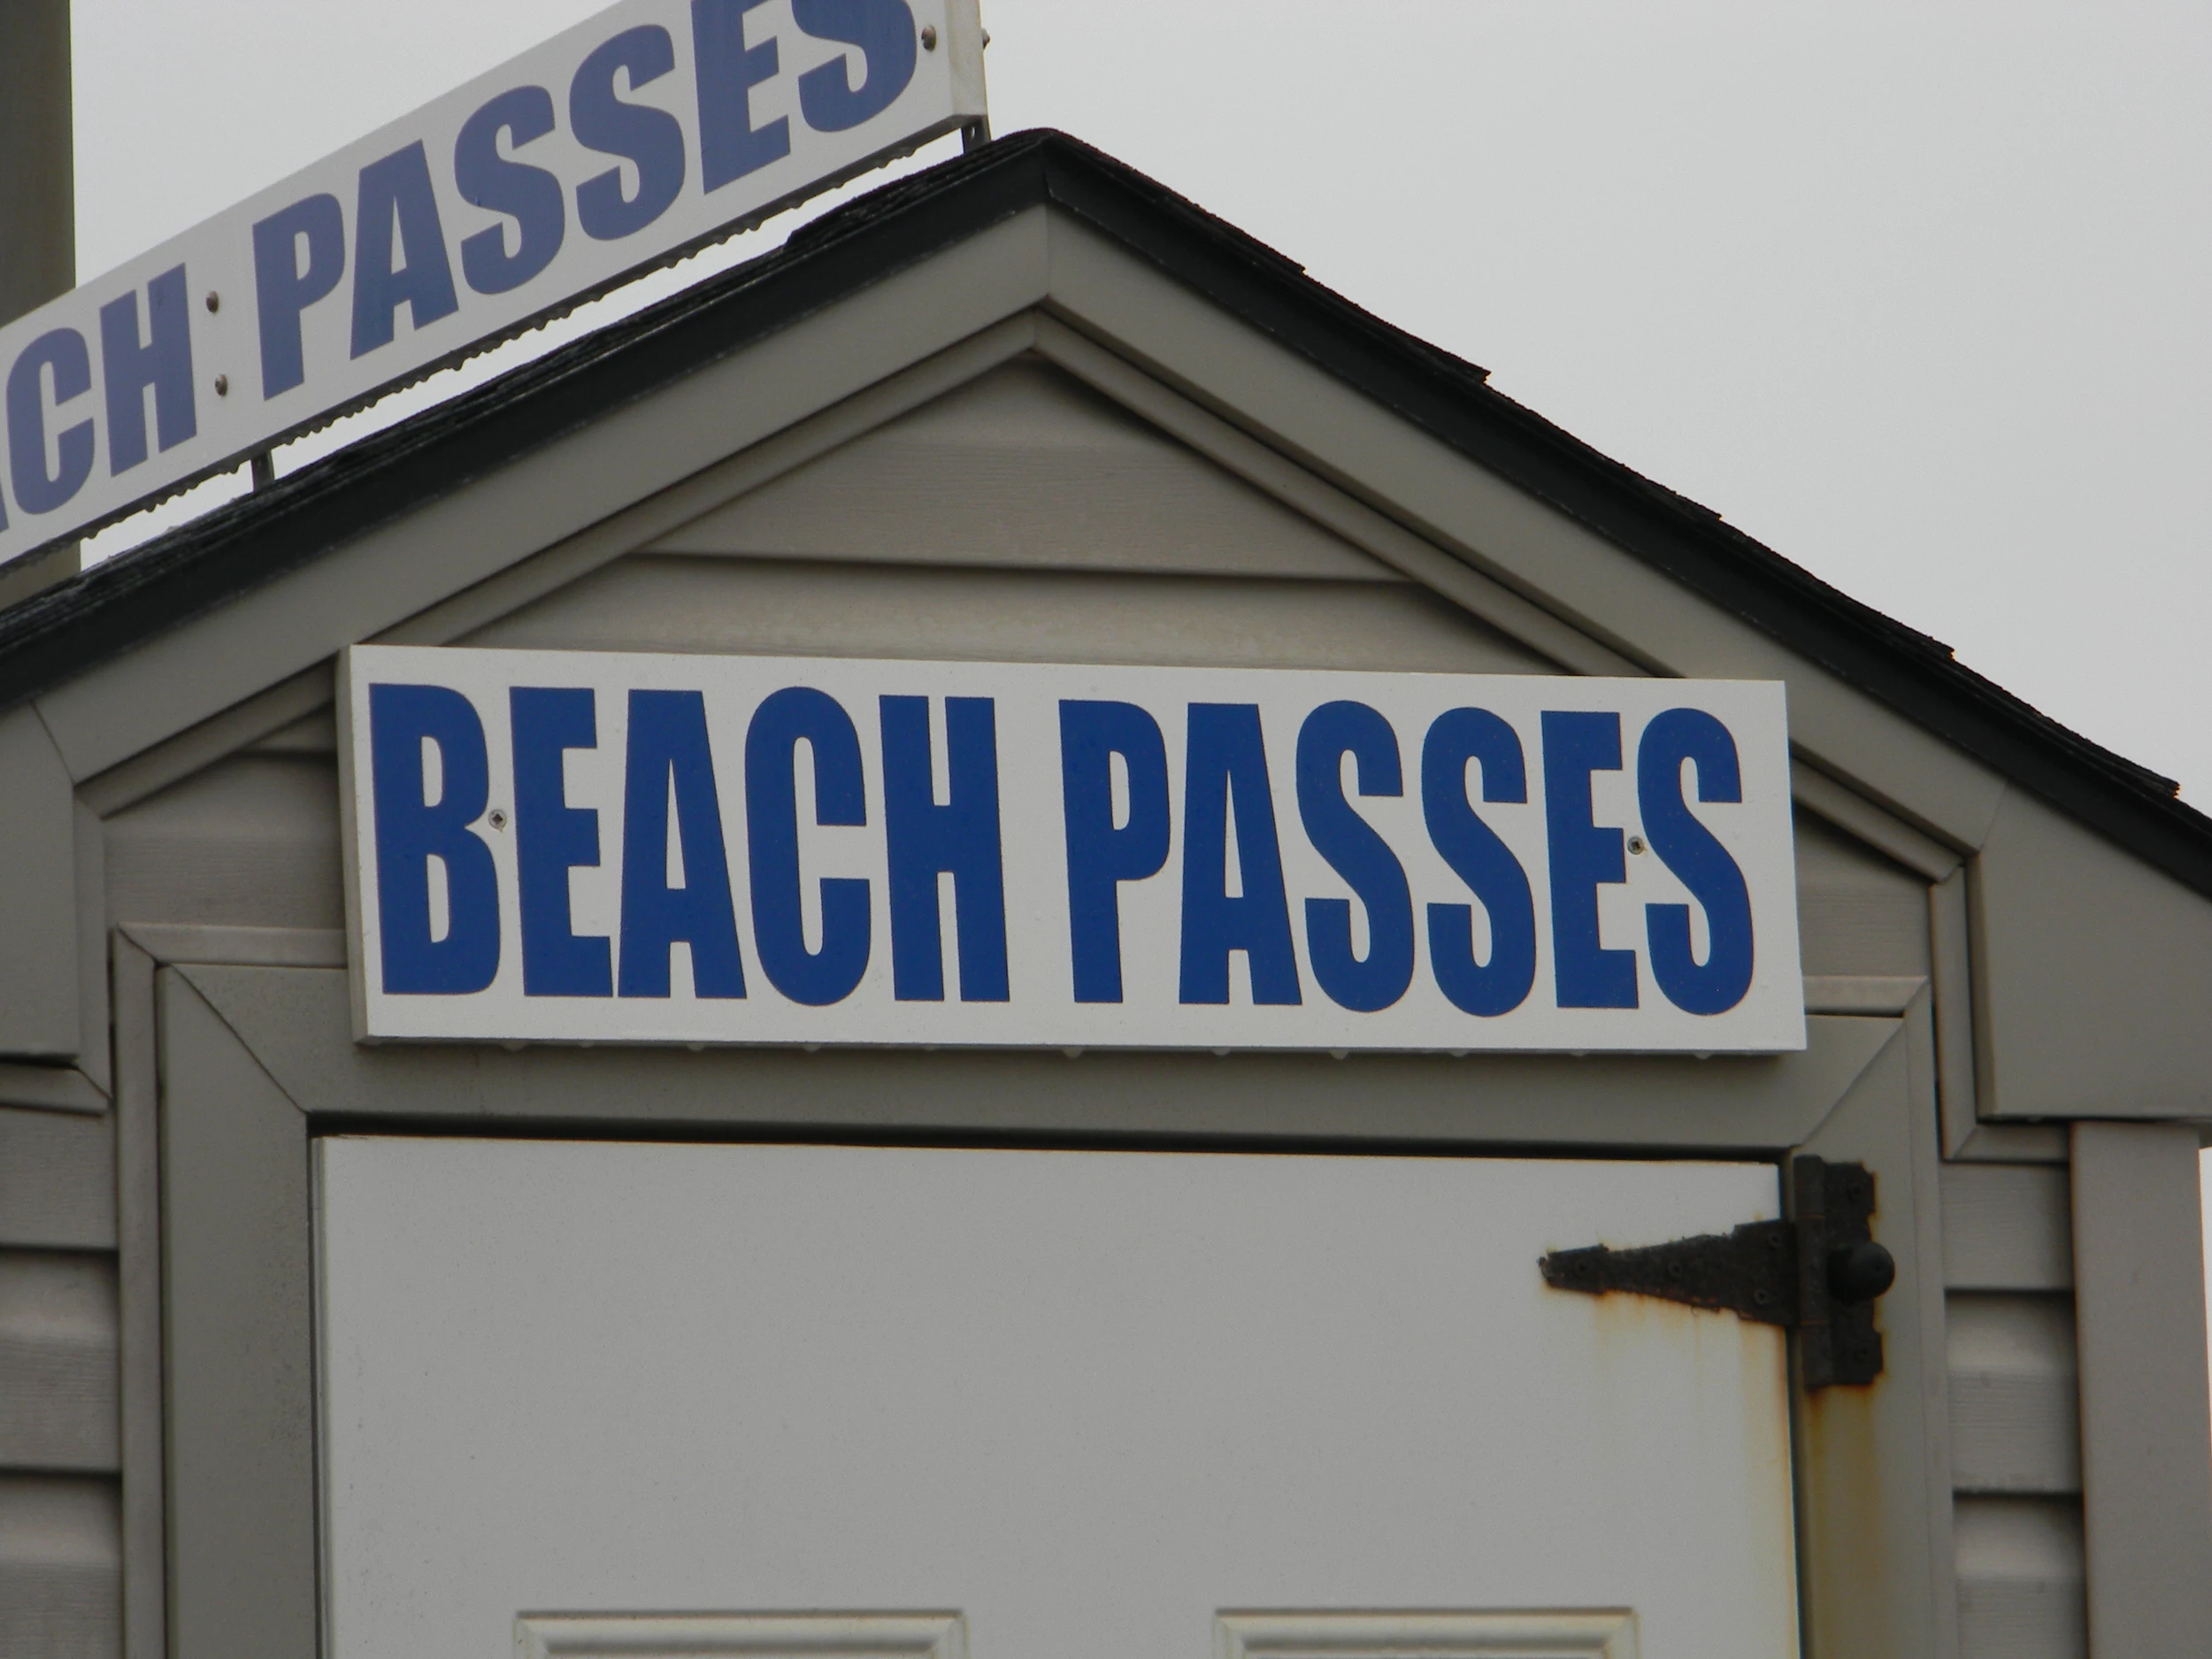 Seaside Heights Beach Badges 92.7 WOBM